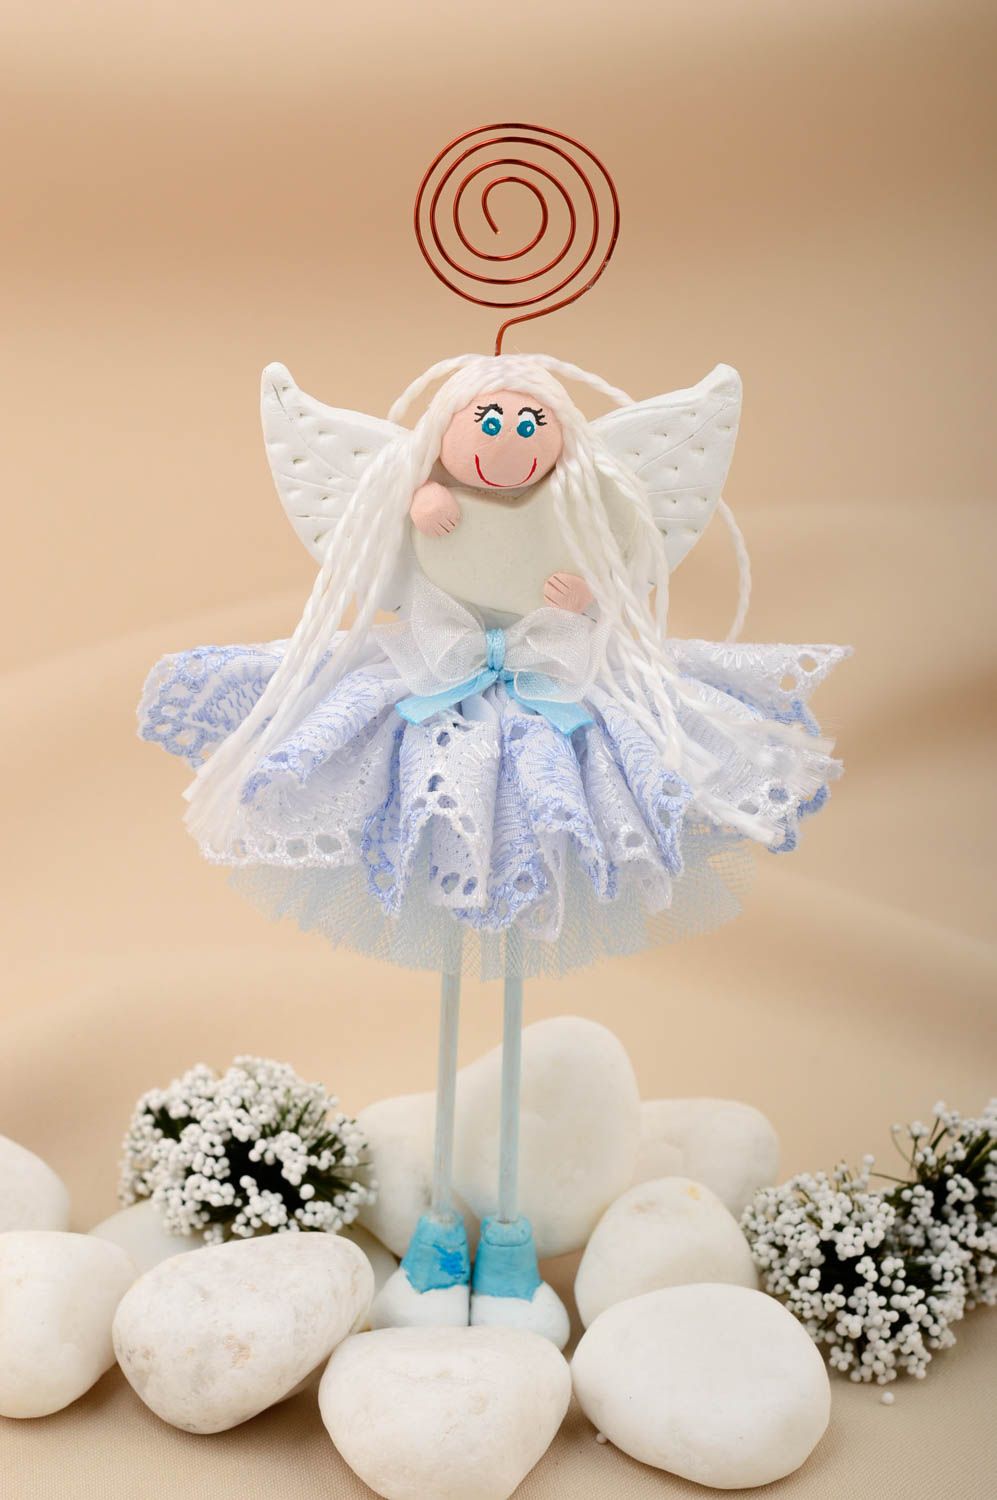 Angel doll handmade kitchen decor interior dolls home ideas decorative use only photo 1